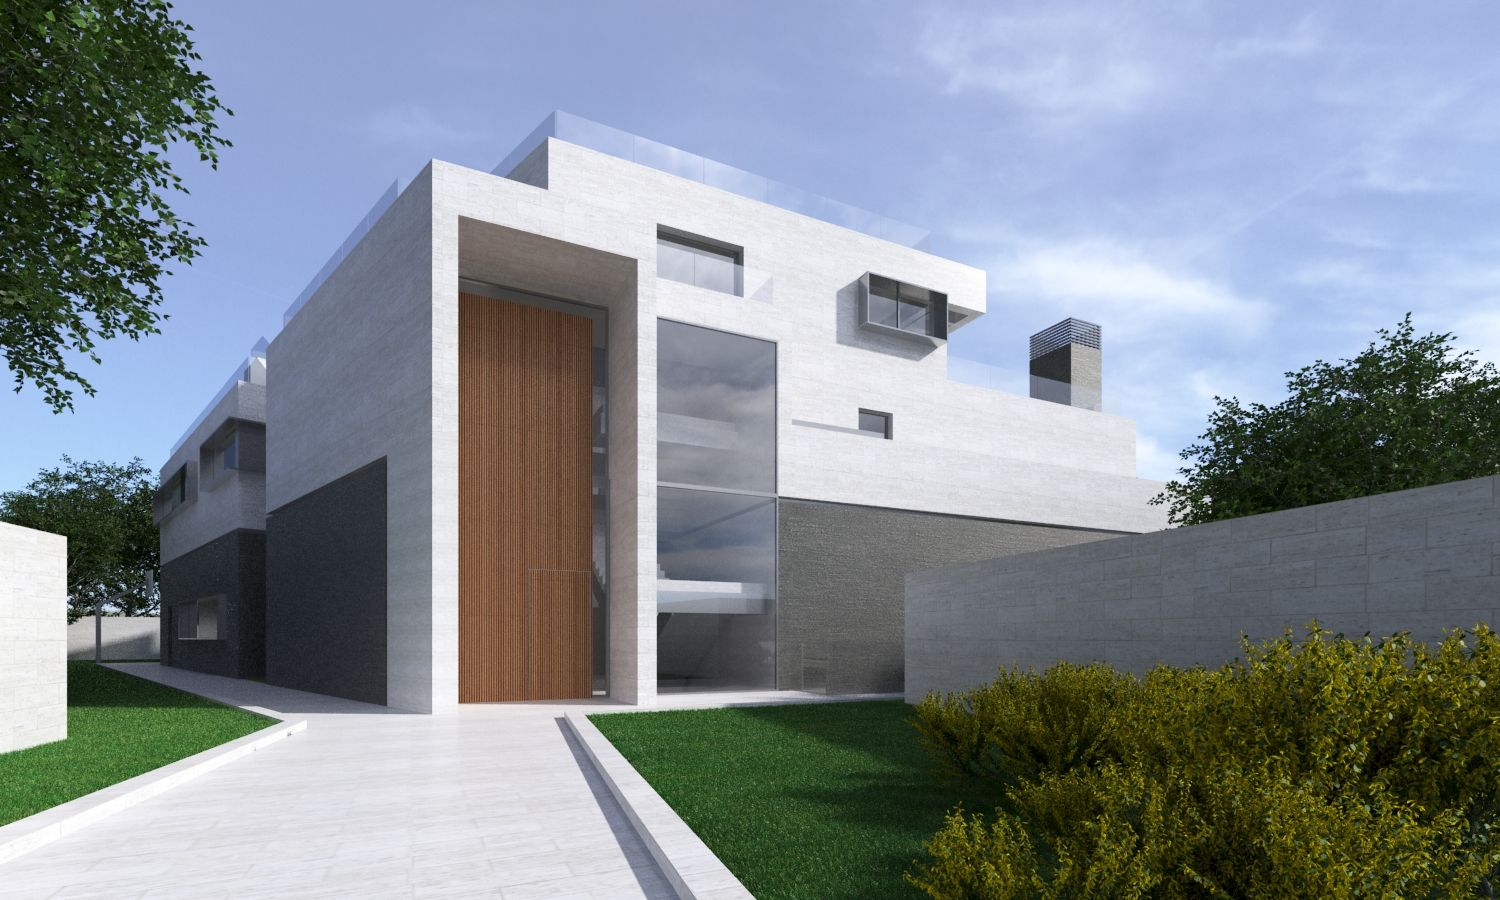 Vivienda unifamiliar en Madrid, ARQZONE 3D+Design Studio ARQZONE 3D+Design Studio Casas familiares Pedra Calcária